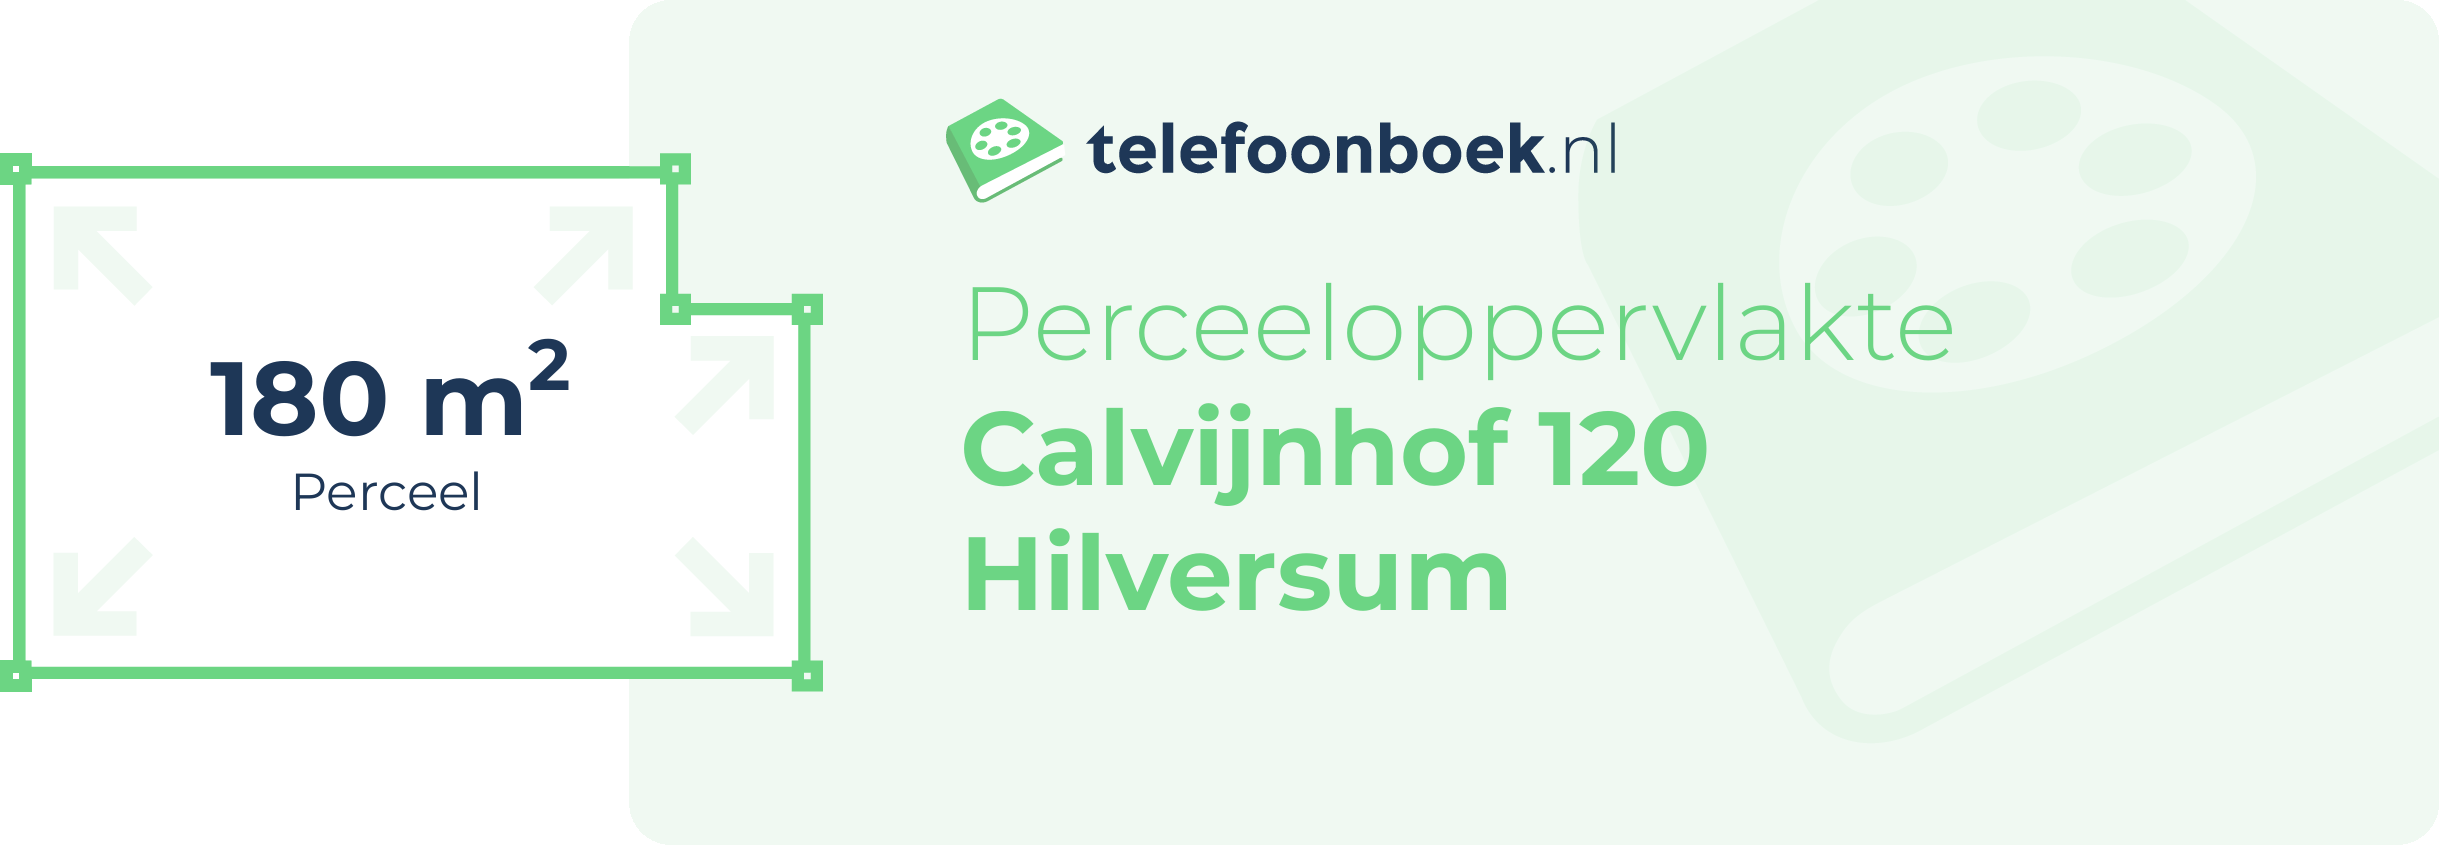 Perceeloppervlakte Calvijnhof 120 Hilversum